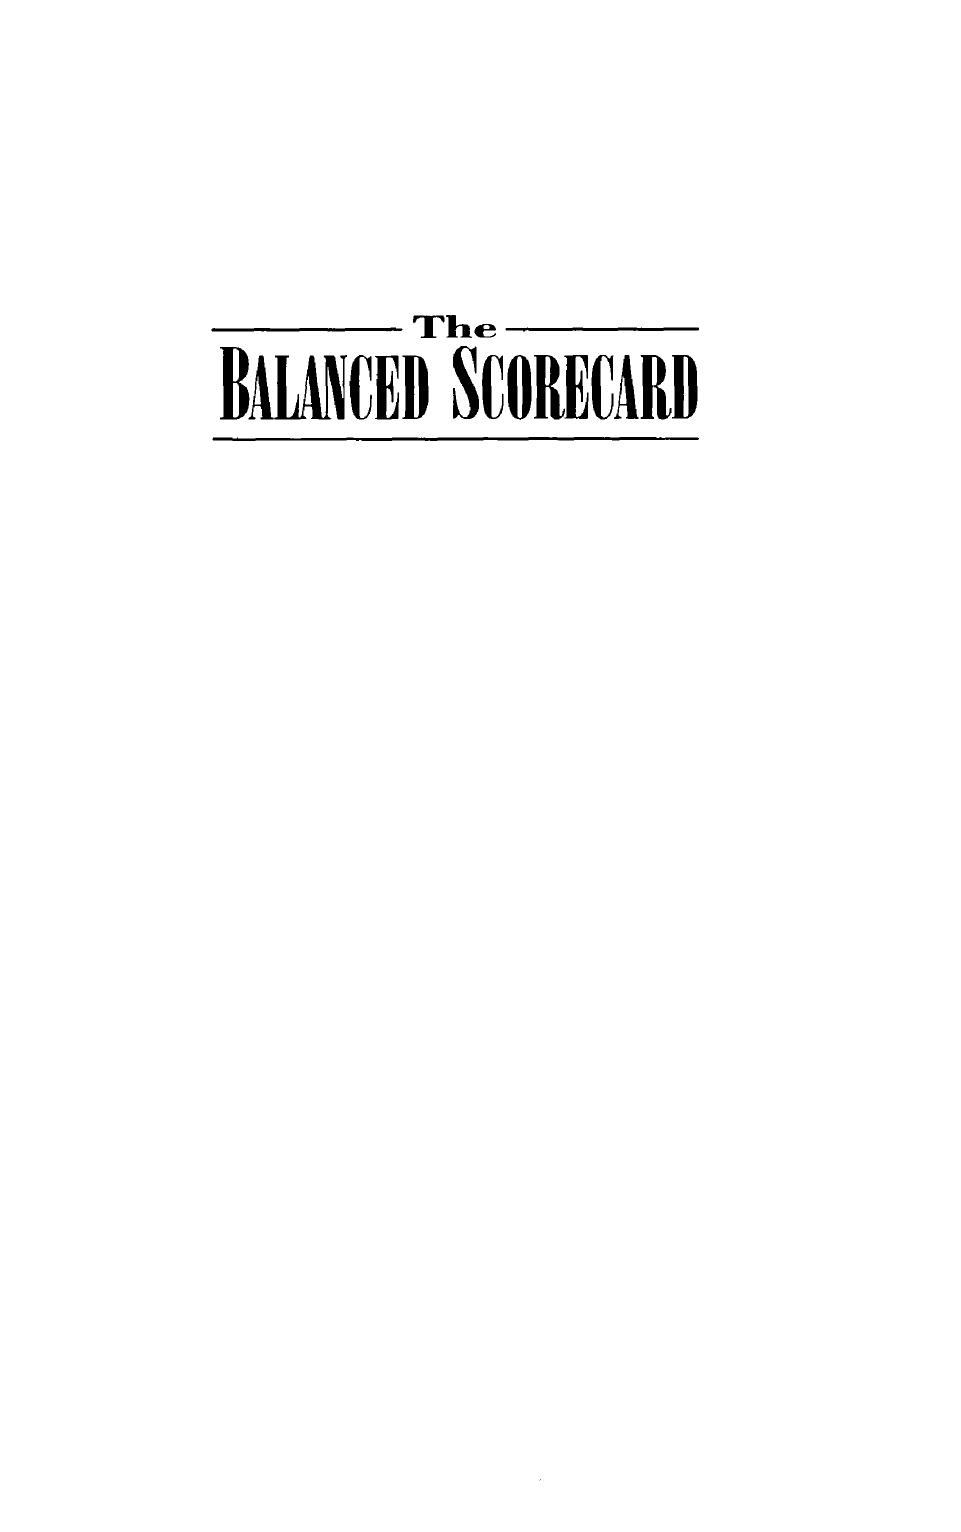 Robert S. Kaplan, David P. Norton The Balanced Scorecard Translating Strategy into Action 1996